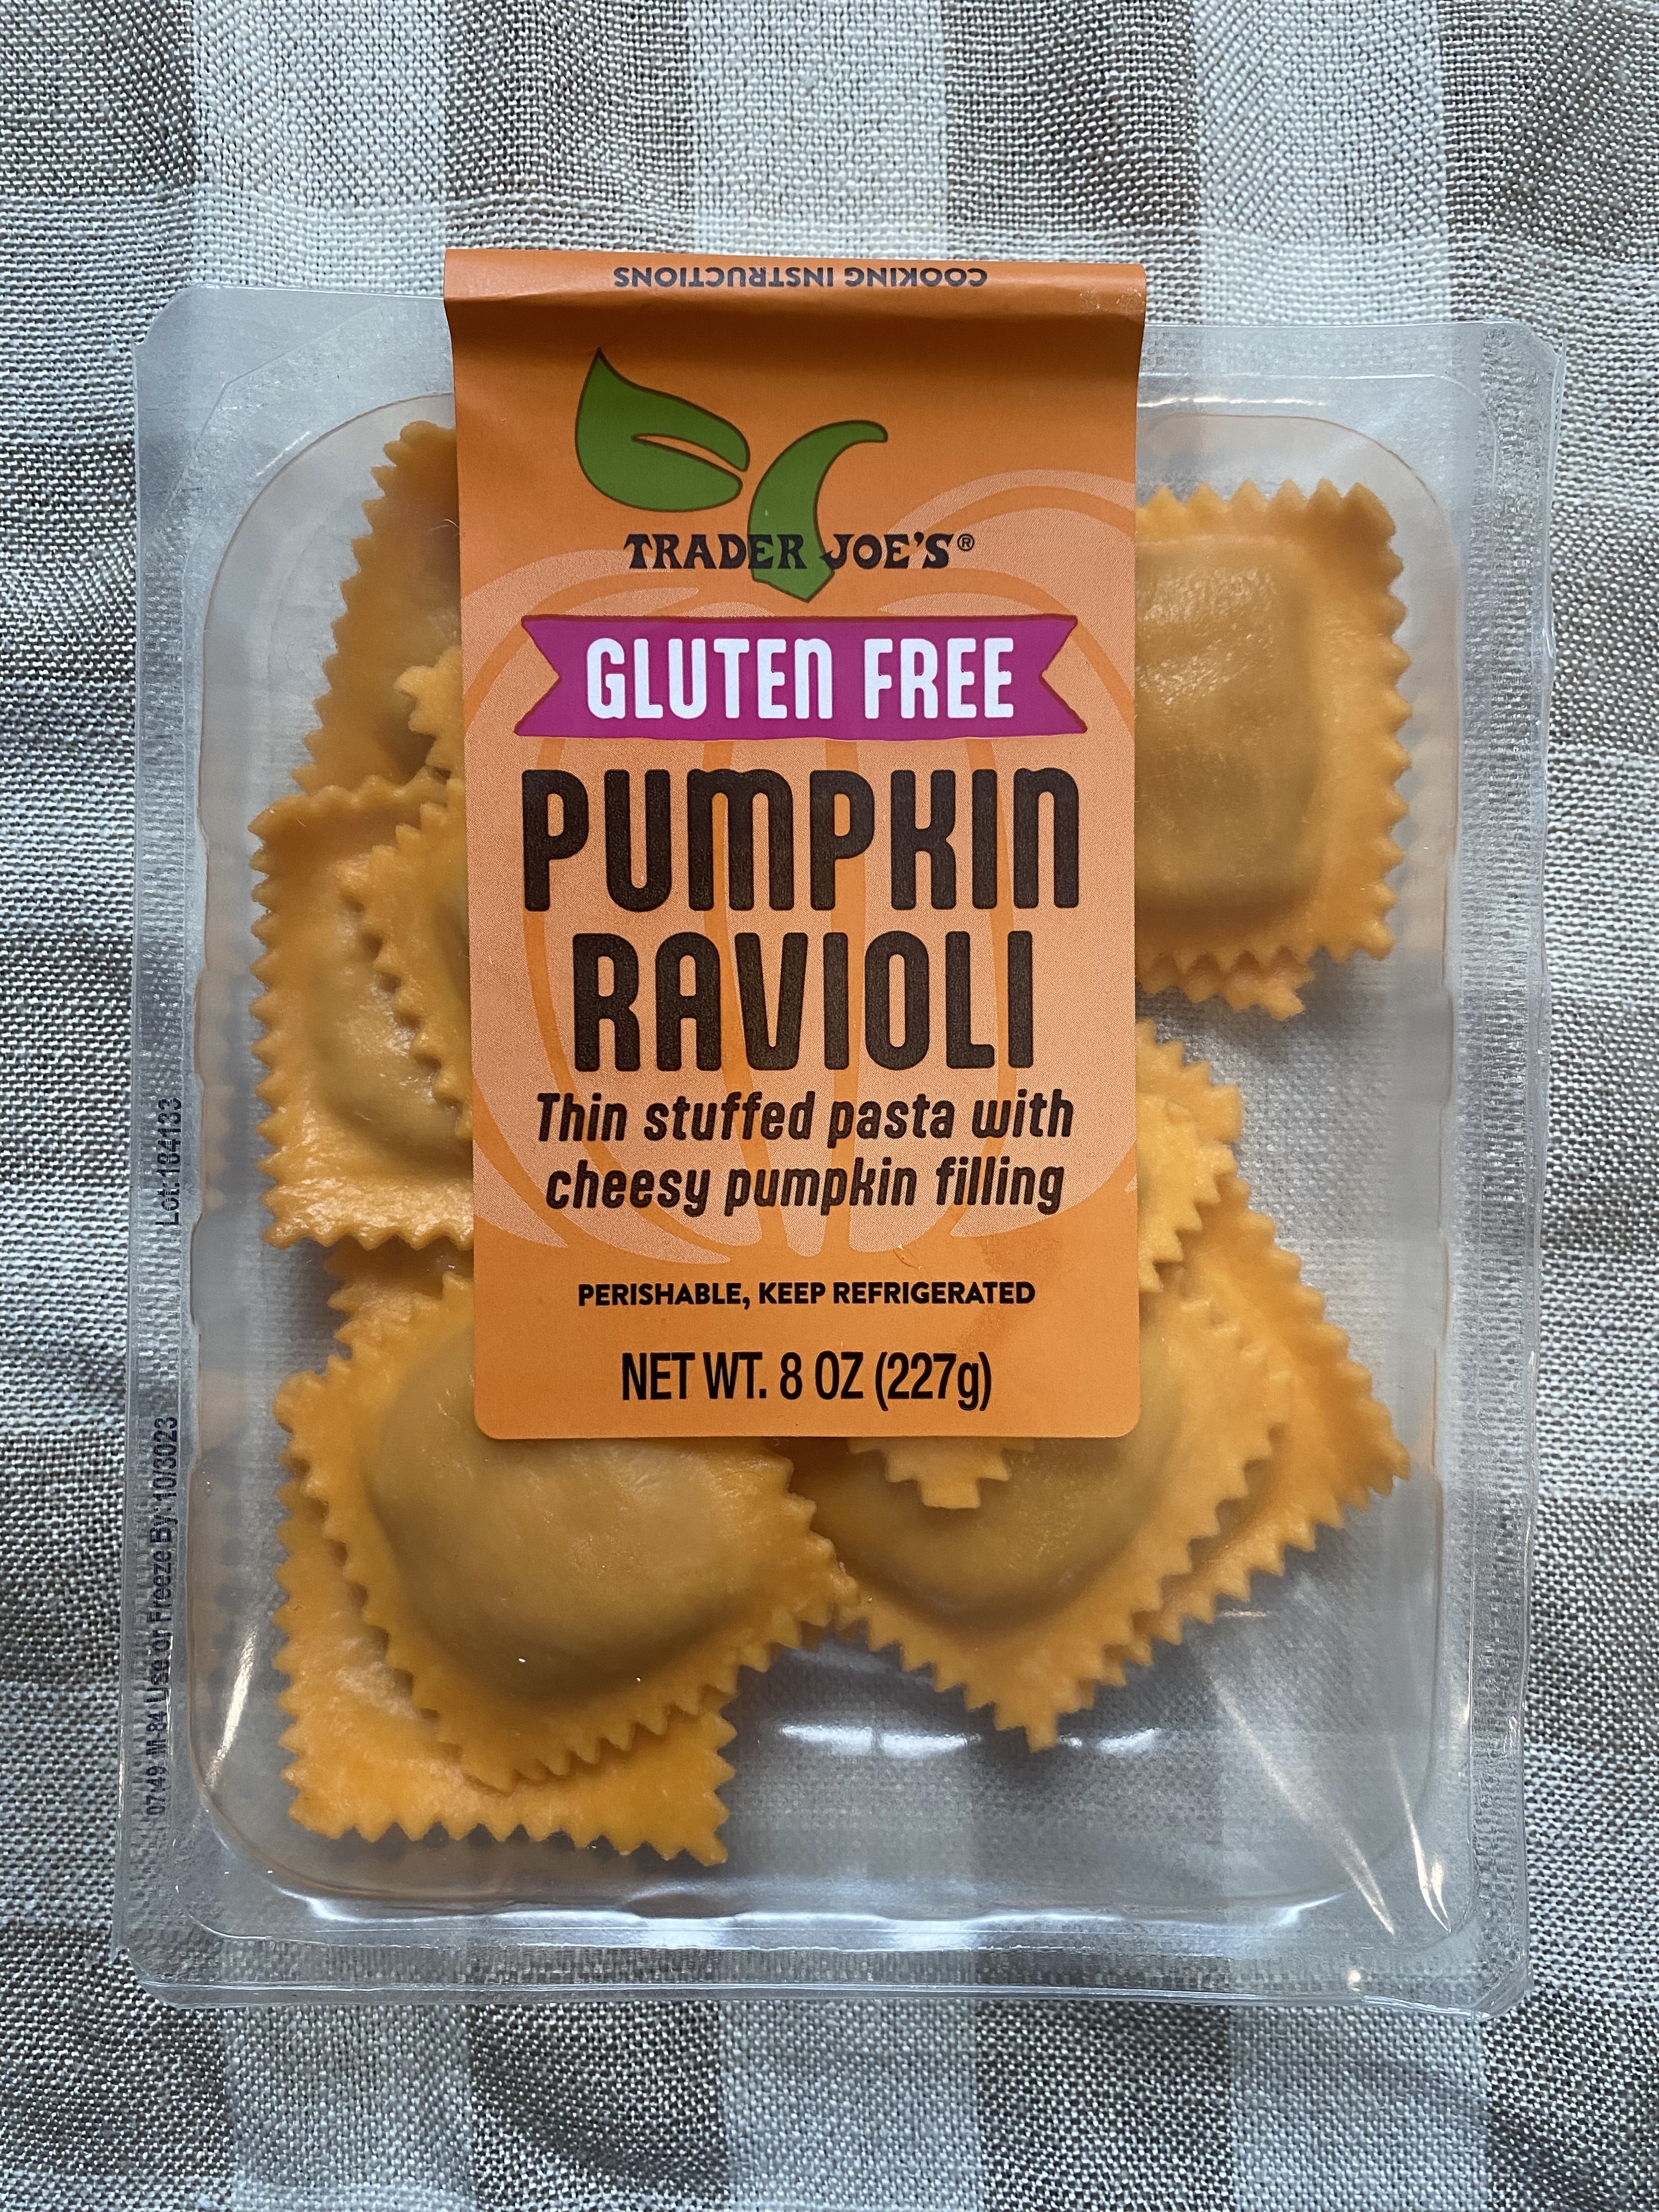 an unopened package of gluten free pumpkin ravioli